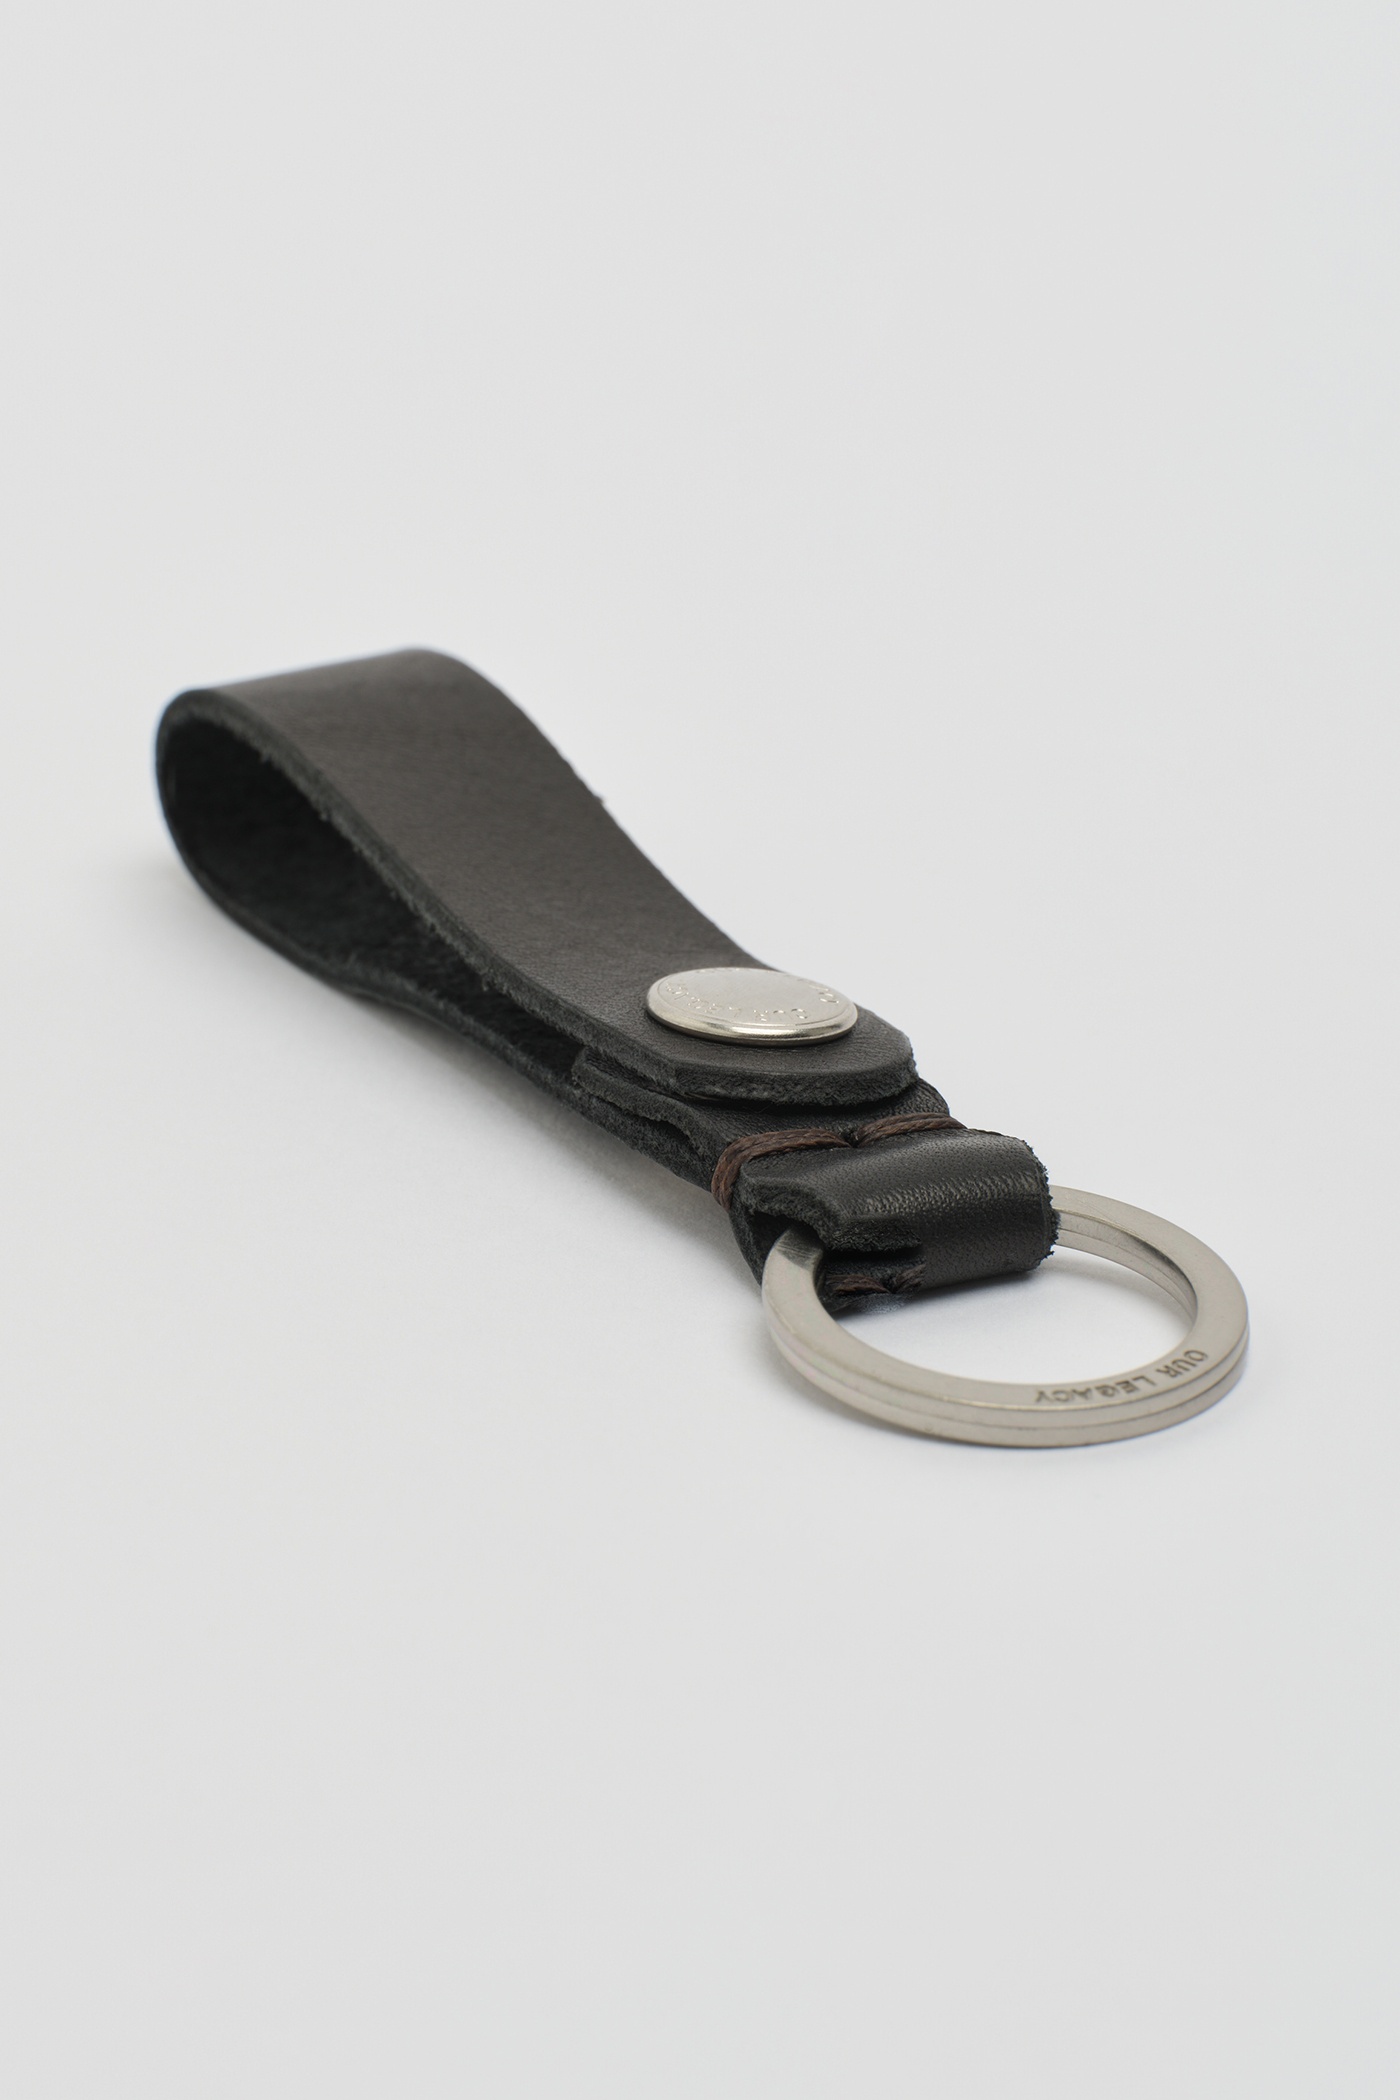 Key Holder Black Leather - 2